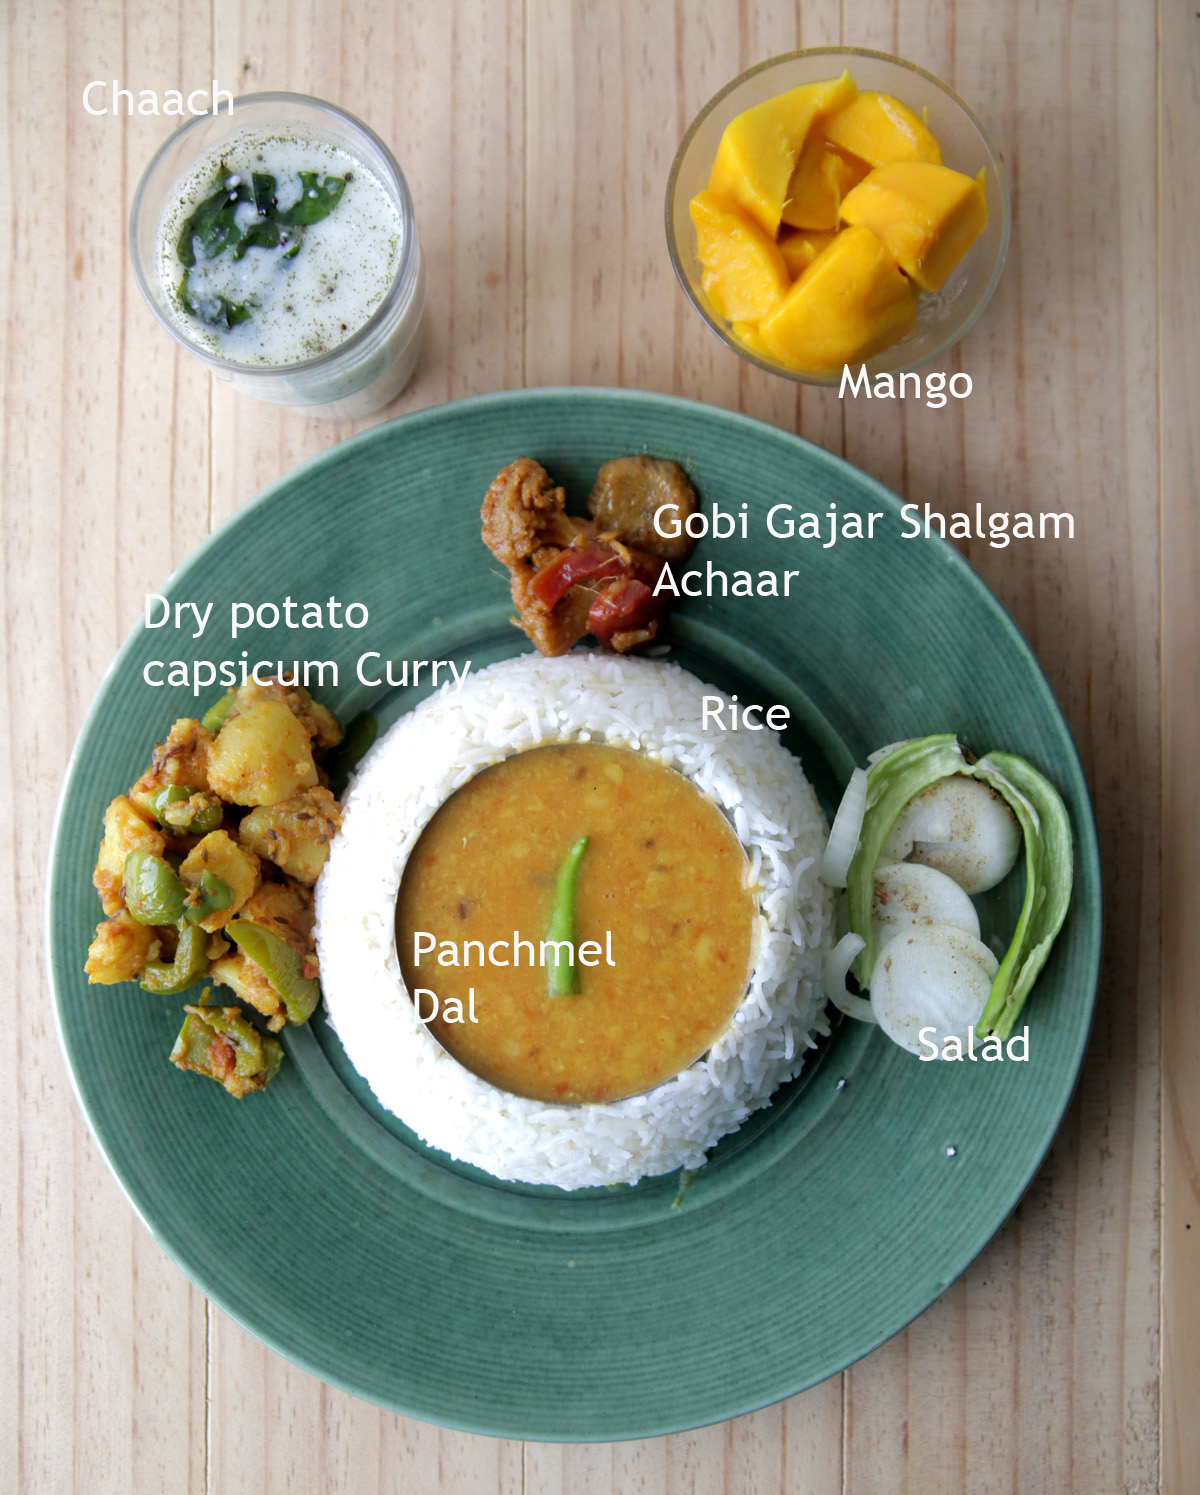 15 Vegetarian Indian Lunch Ideas - #vegetarian #lunchideas #indianfood